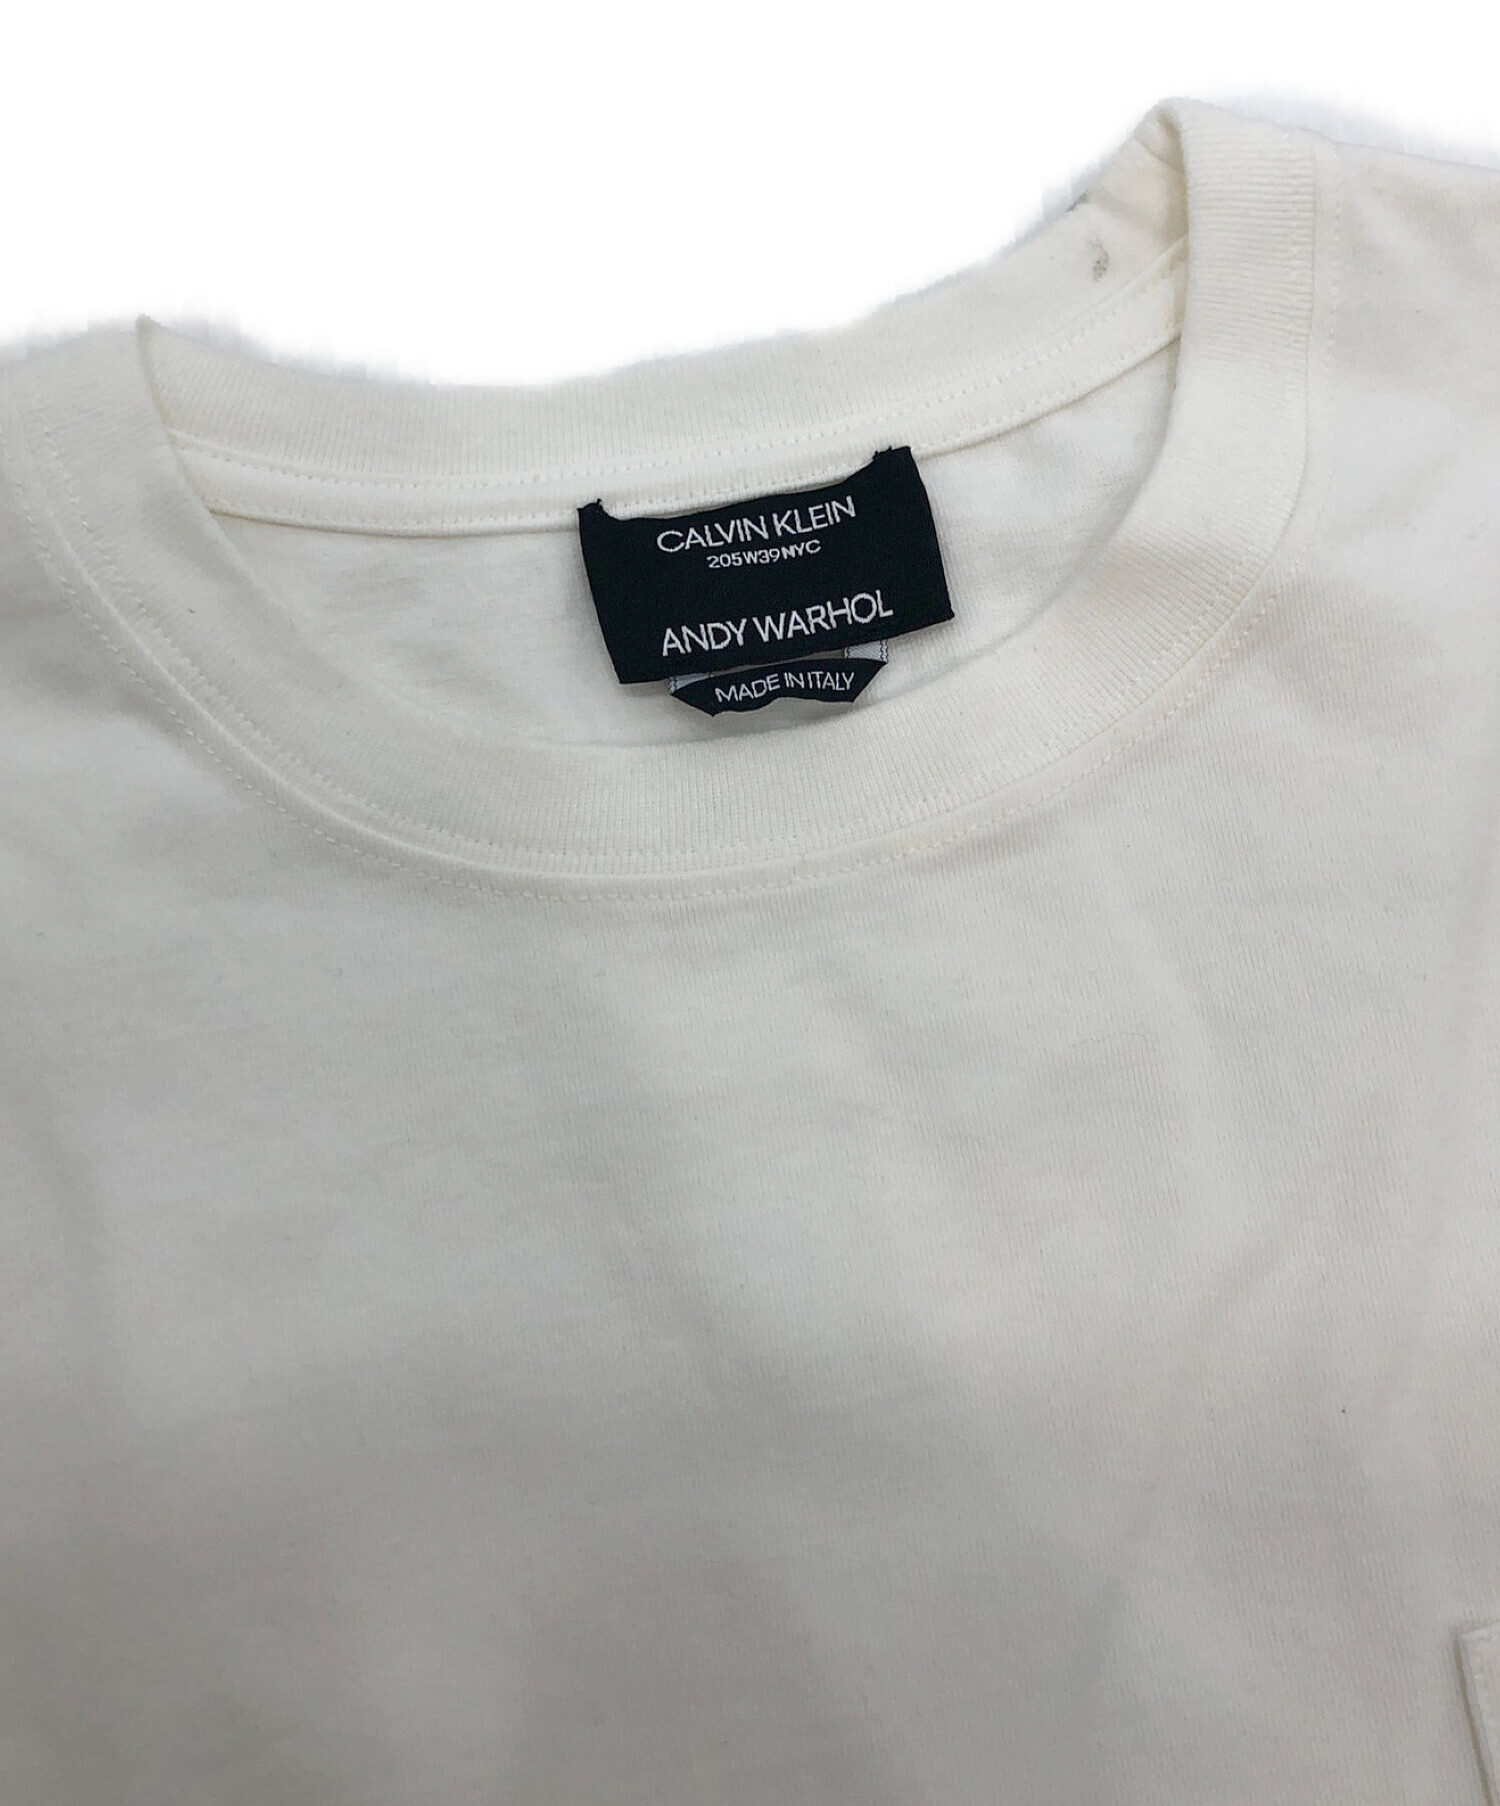 CALVIN KLEIN 205W39NYC (カルバンクライン205W39NYC) オーバーサイズプリントTシャツ ホワイト×ピンク サイズ:XS